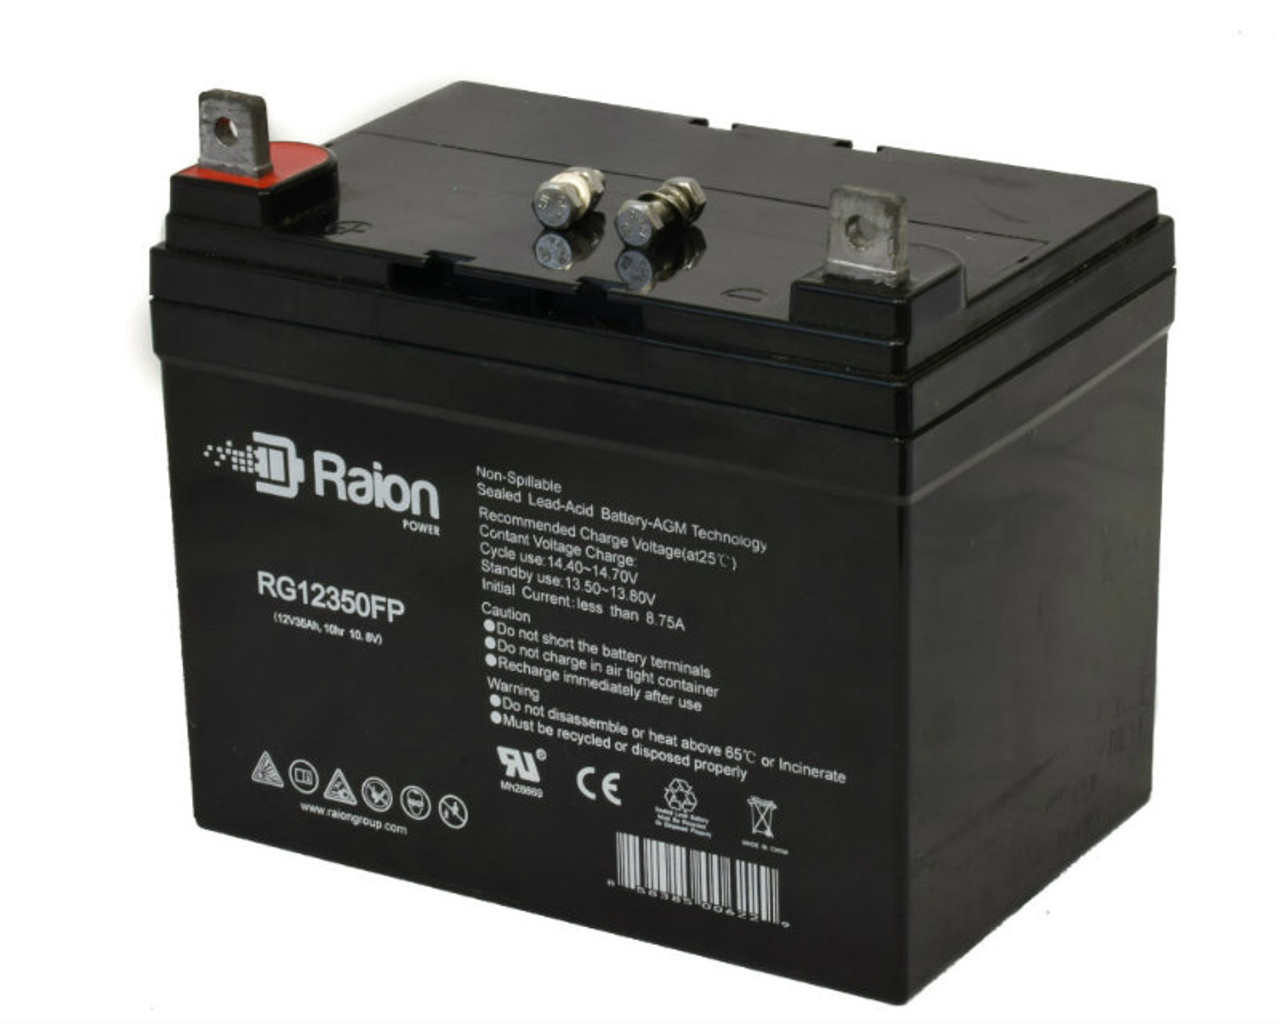 Raion Power Replacement 12V 35Ah RG12350FP Battery for LONG U1-36E